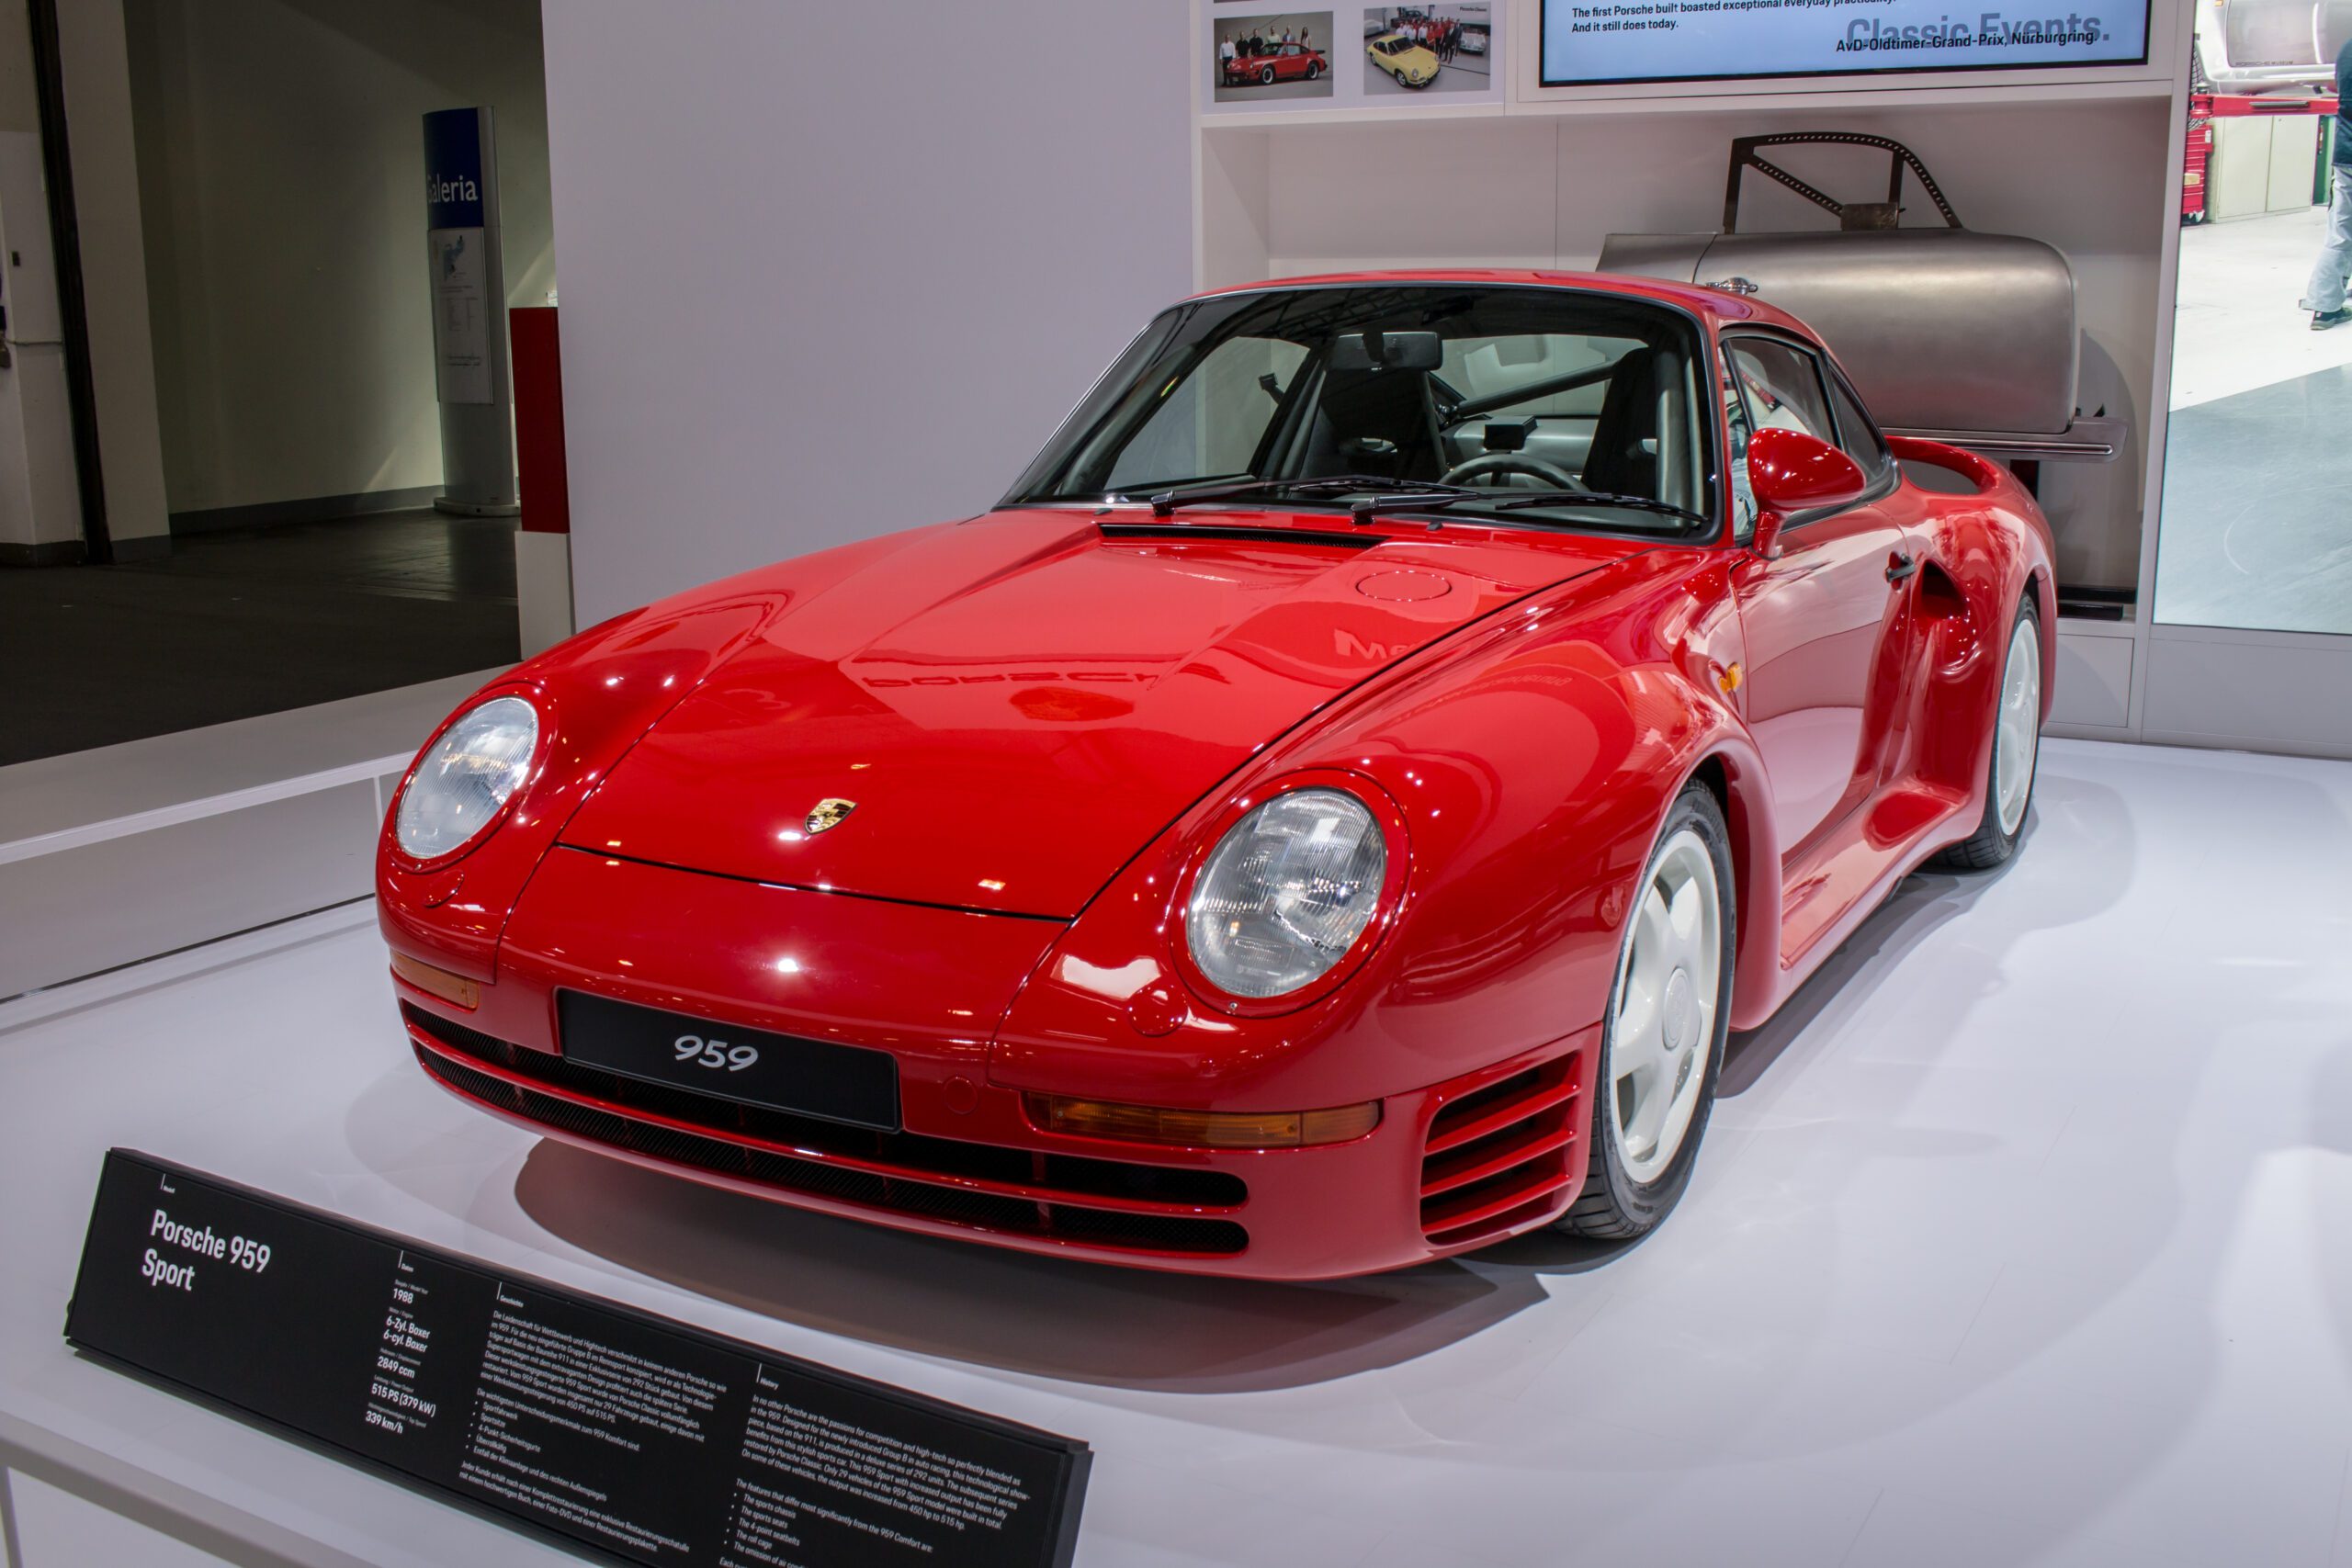 Porsche 959 on display at Techno-Classica event